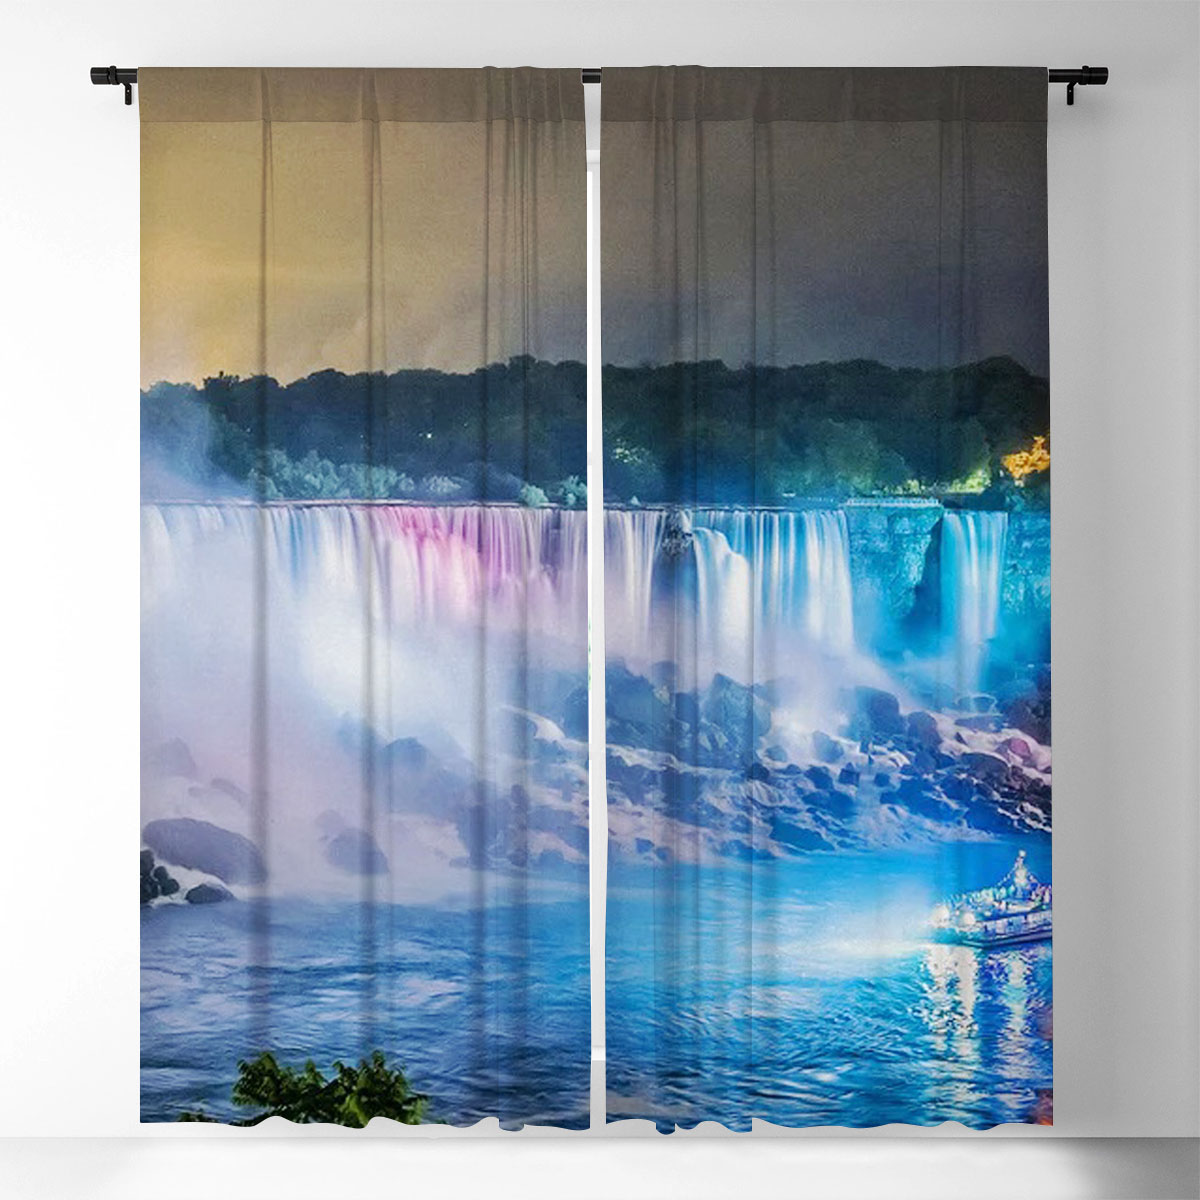 Niagara Falls by Night Window Curtain